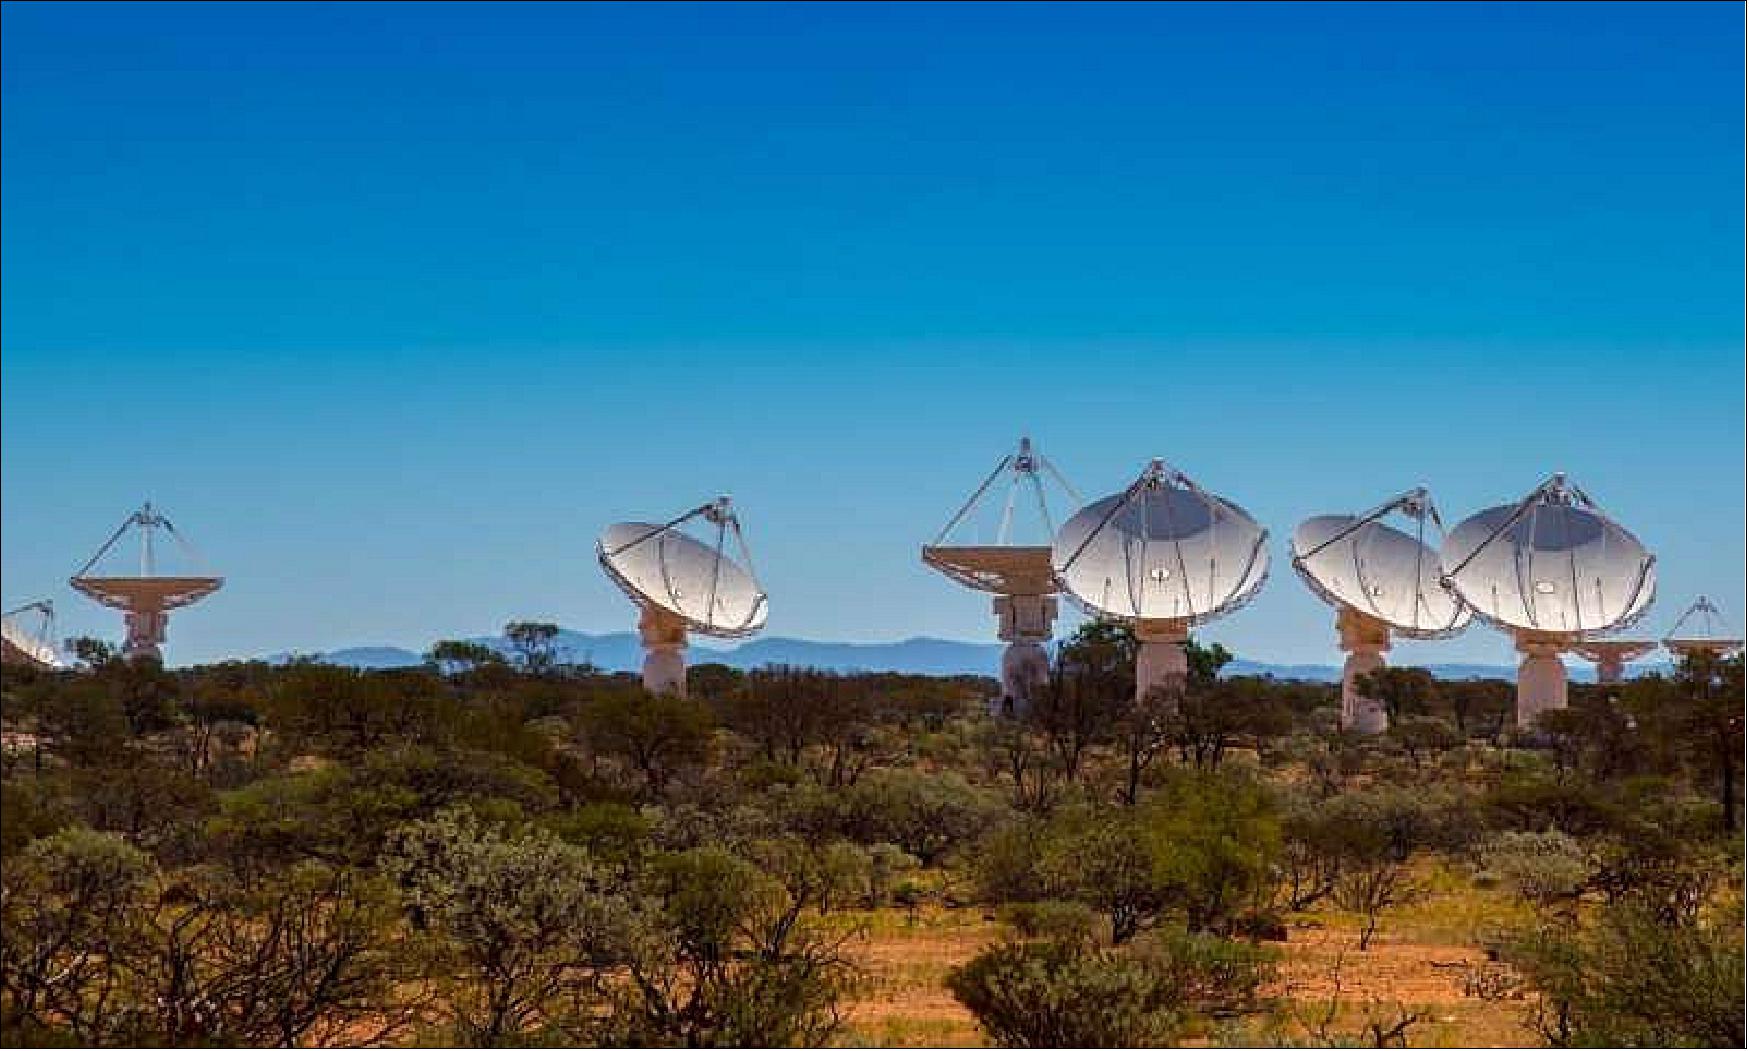 Figure 57: The ASKAP telescope pathfinder in Western Australia (image credit: CSIRO)